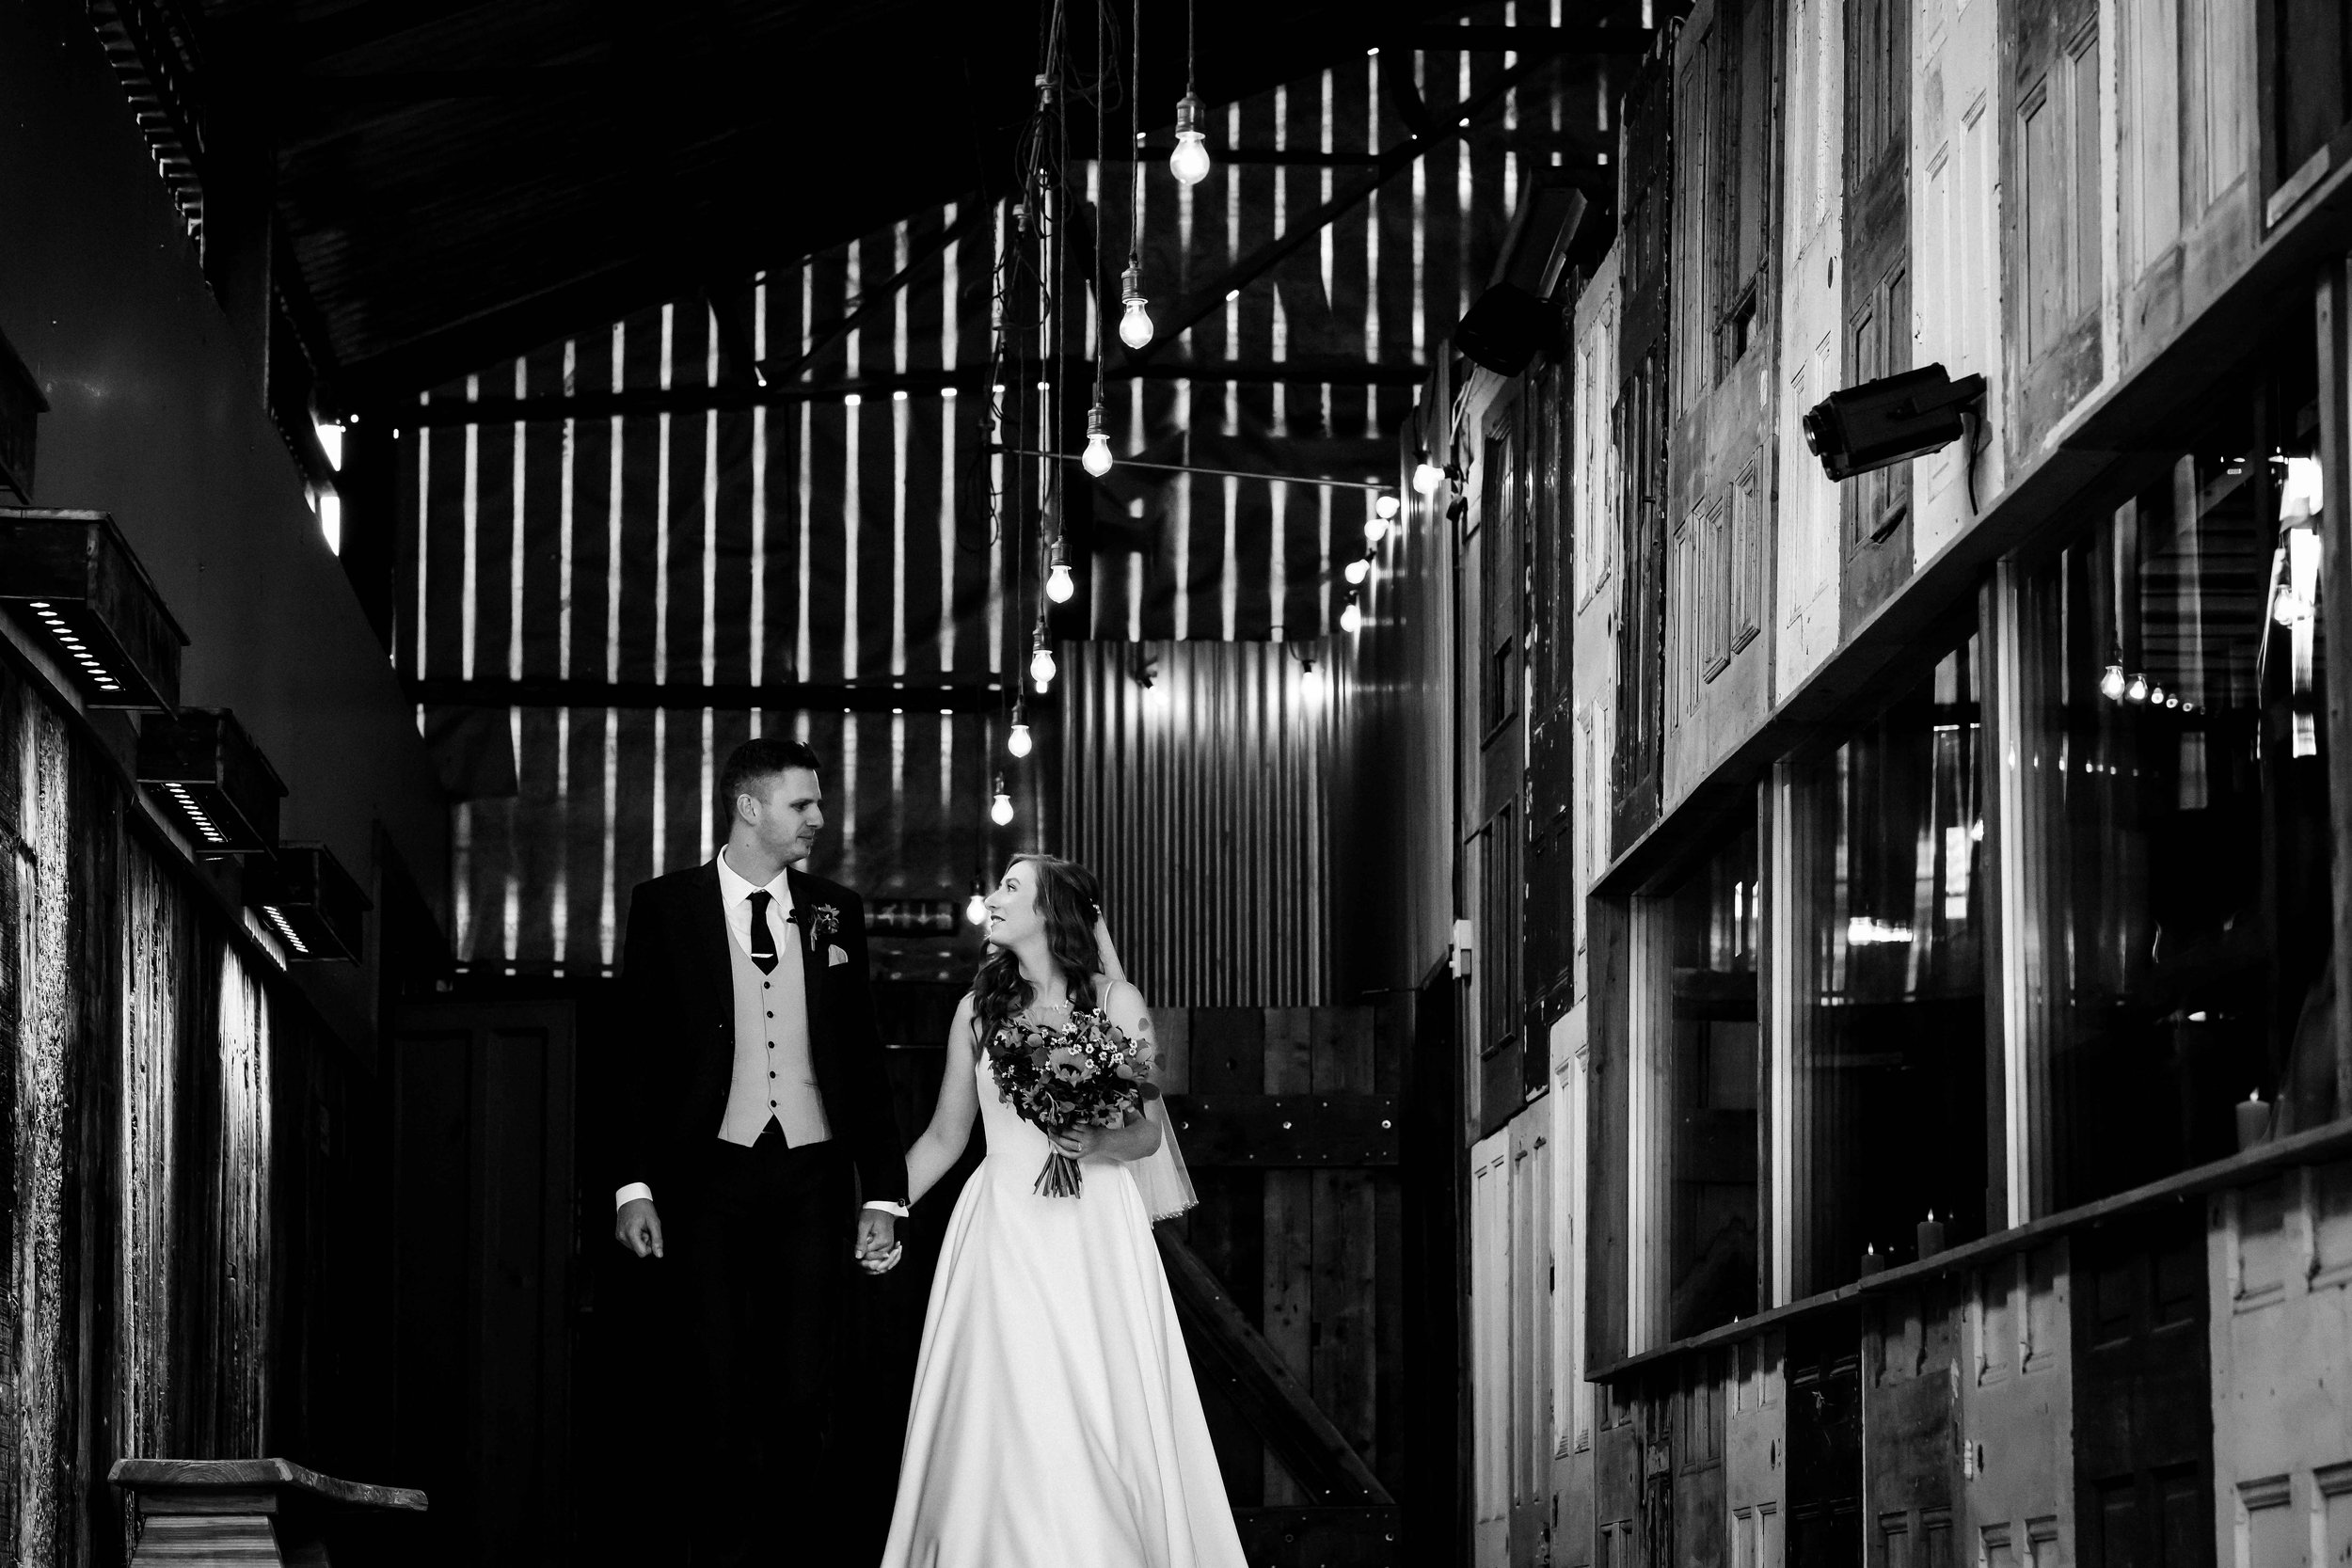 owen house wedding barn wedding photography cheshire - 040.jpg